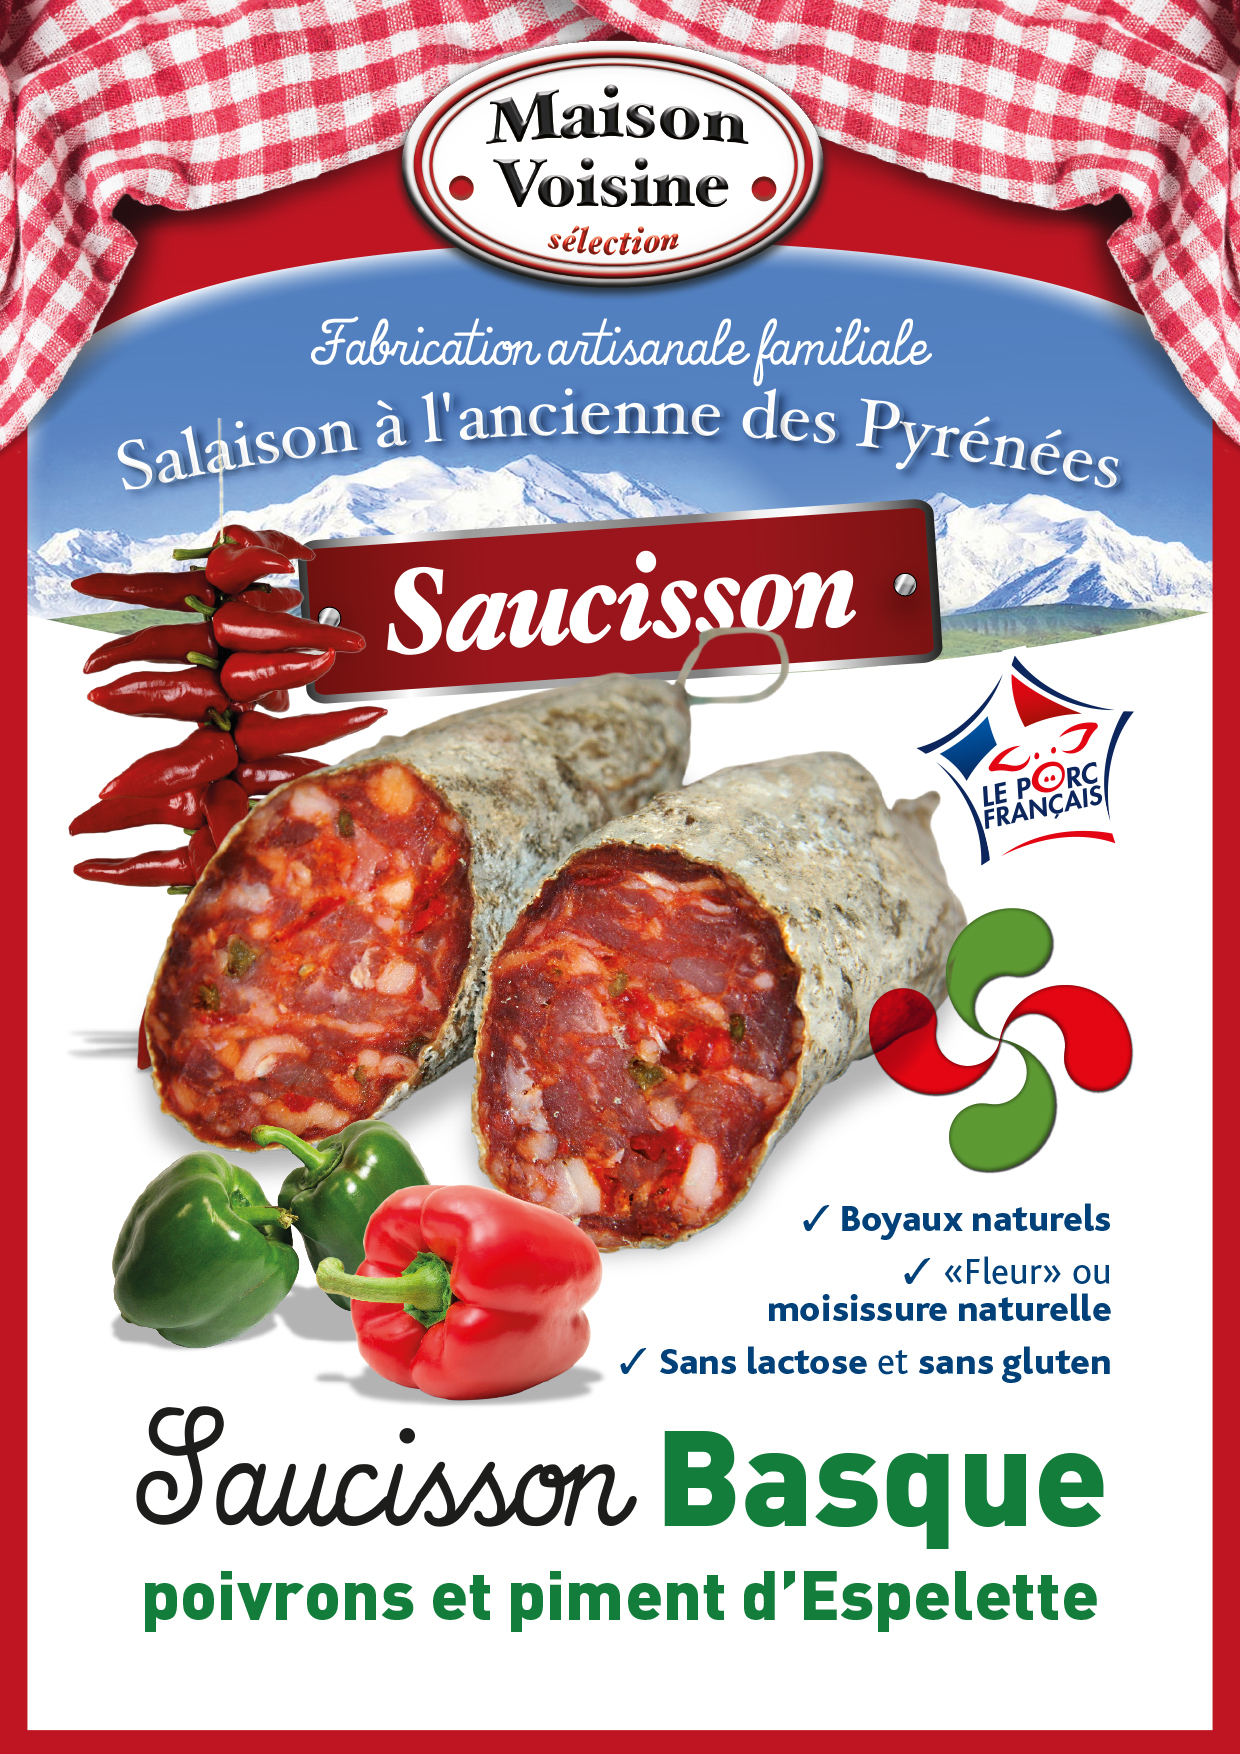 Saucisson basque fabrication artisanale